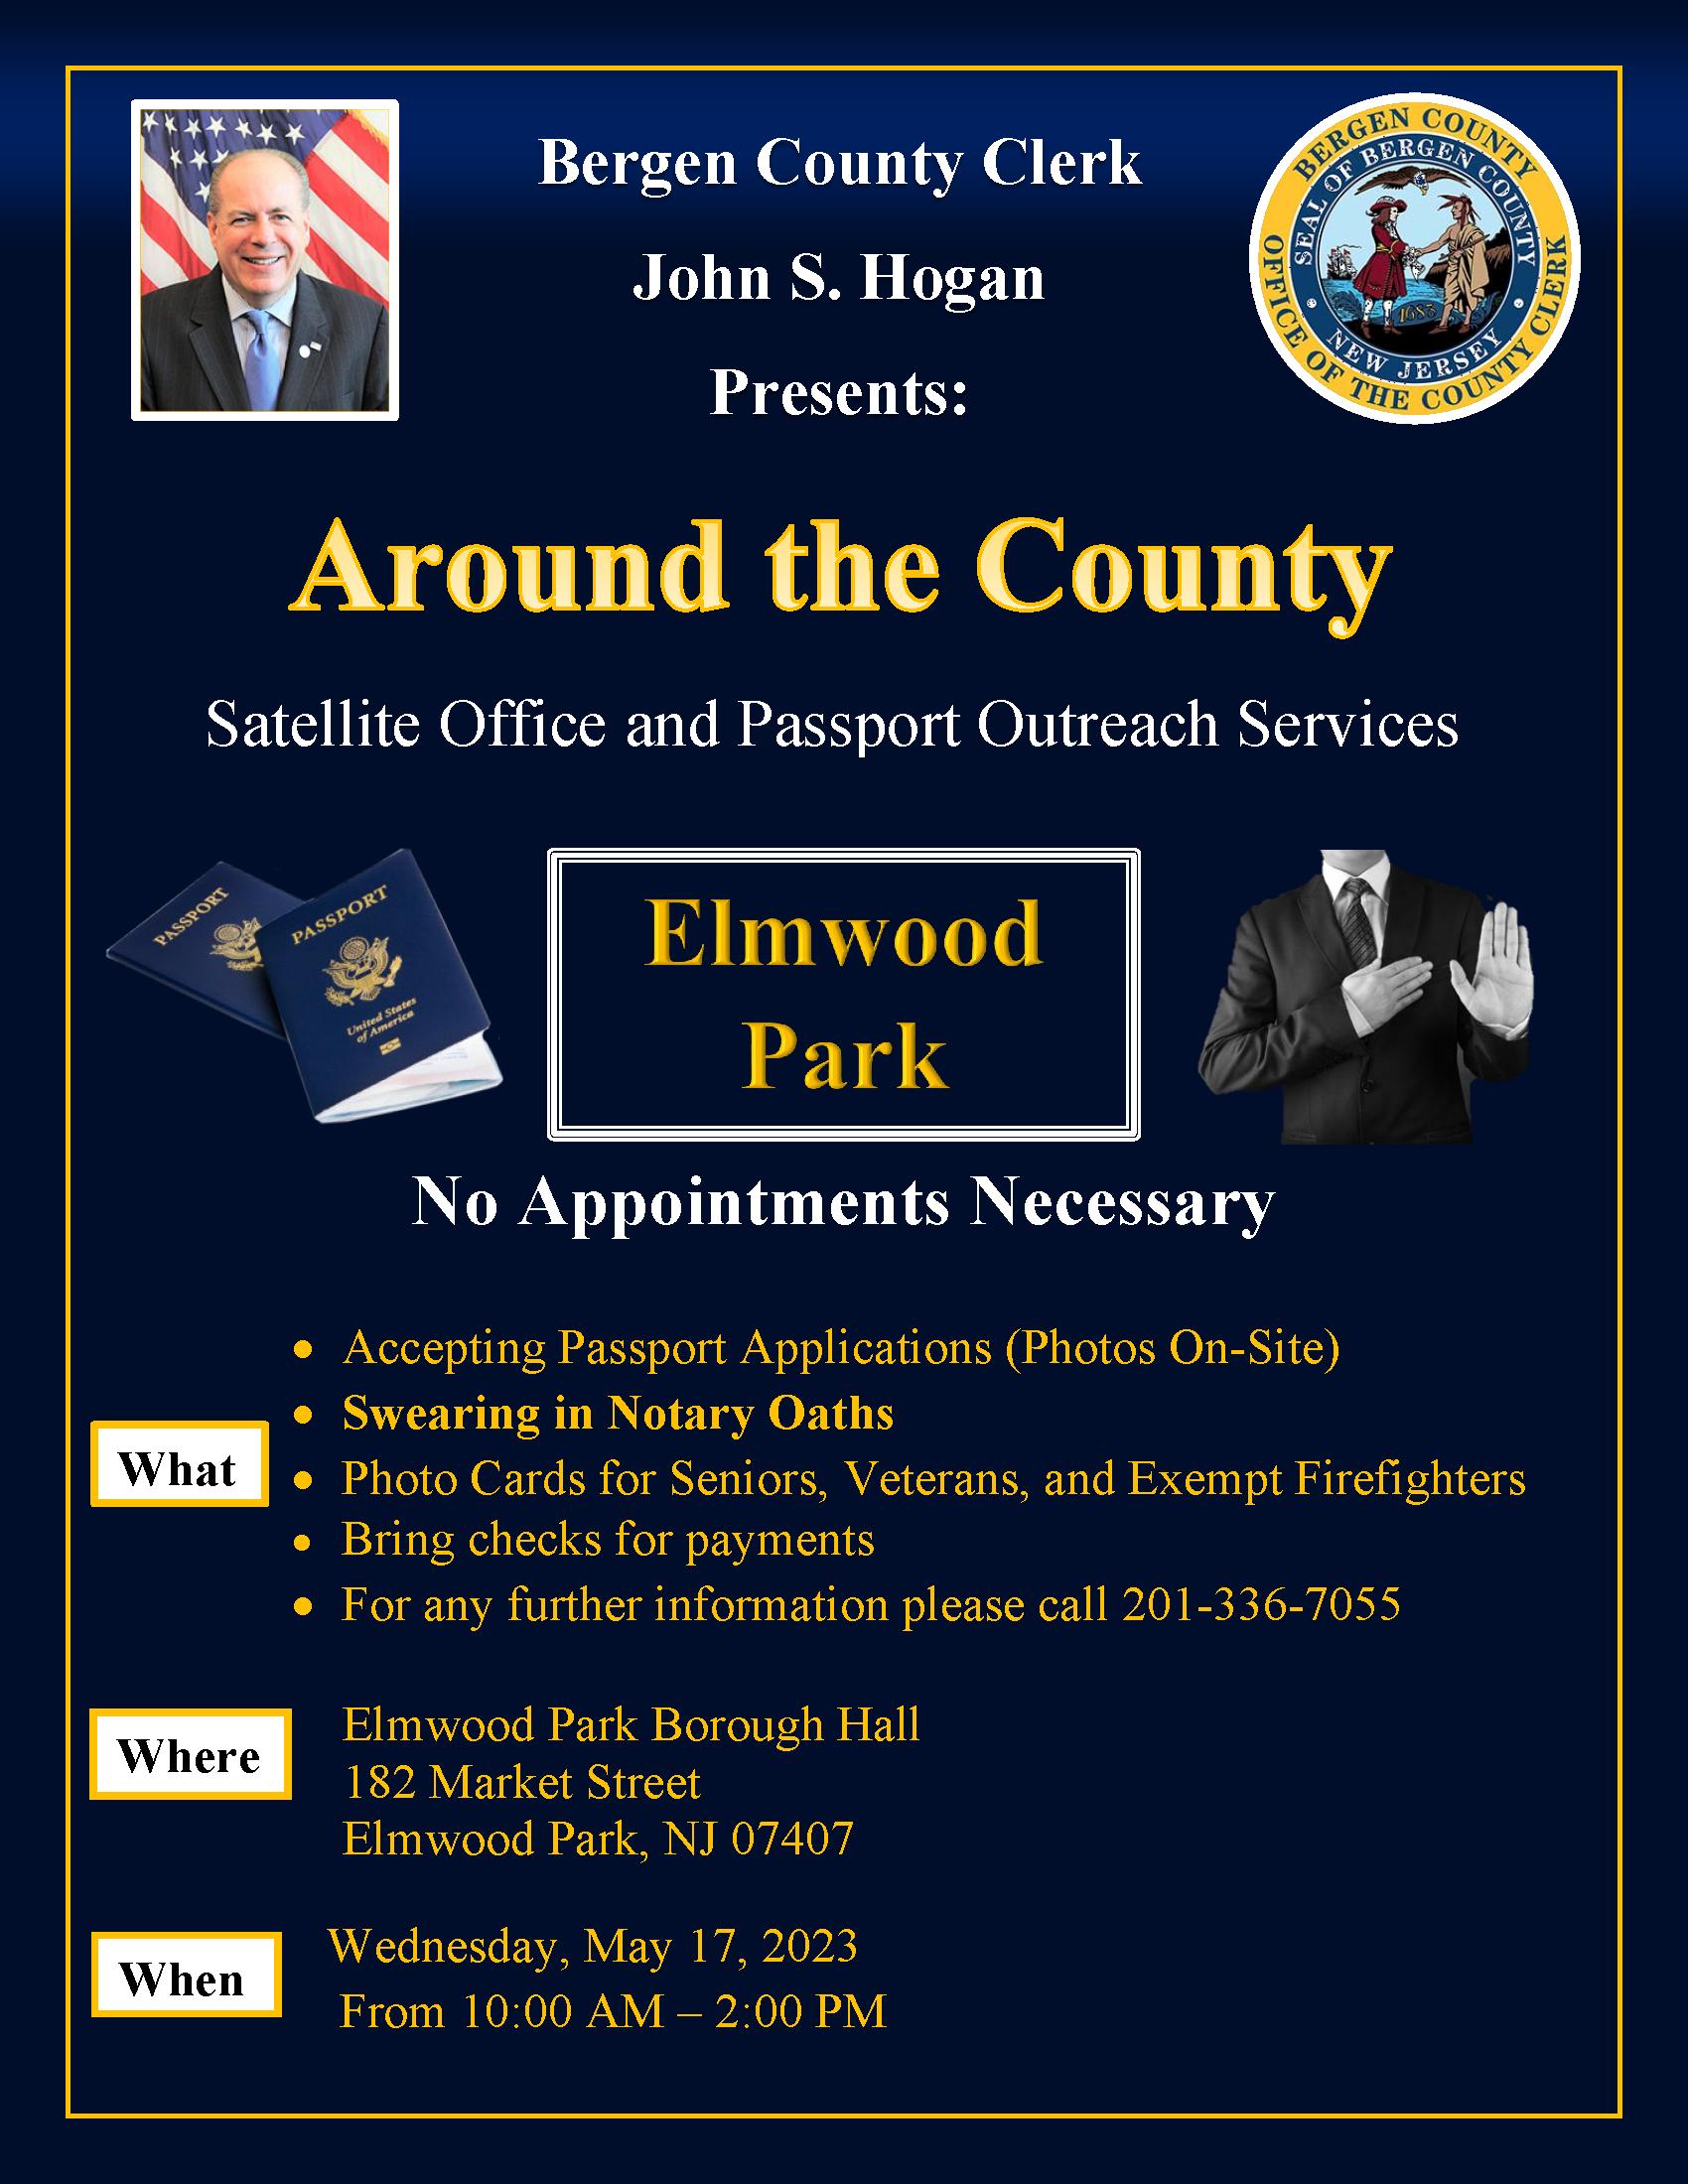 Around the County flyer